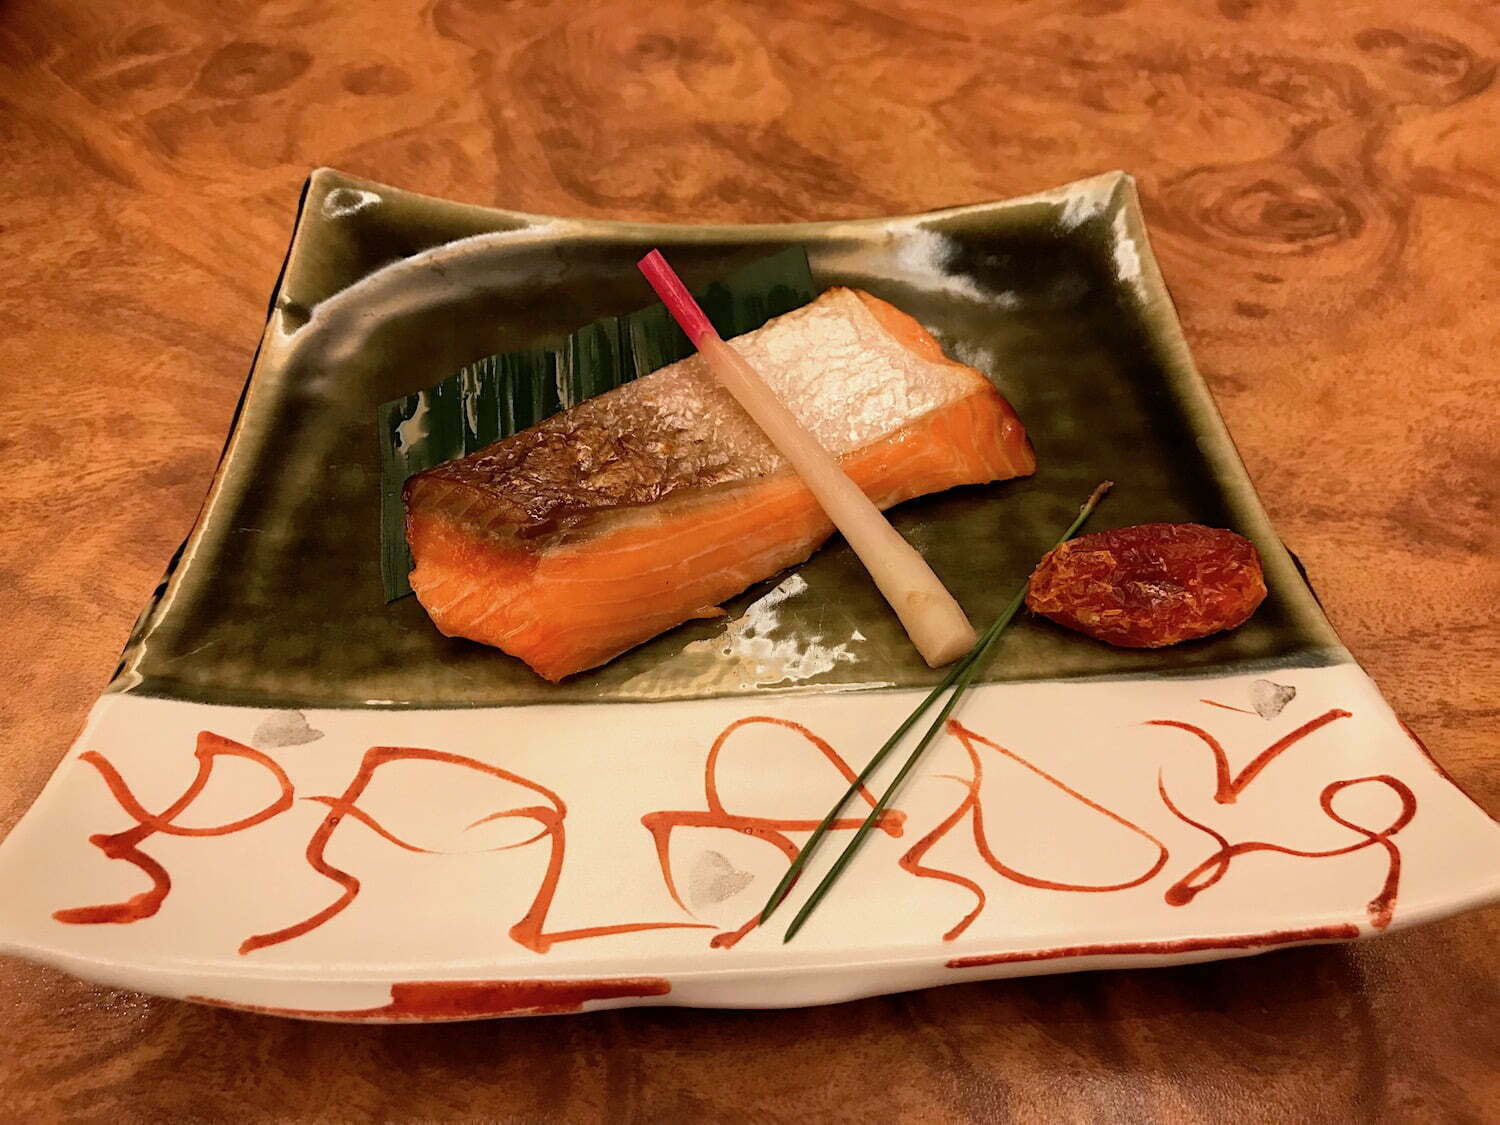 Dinner at Niseko Northern Resort An'nupuri